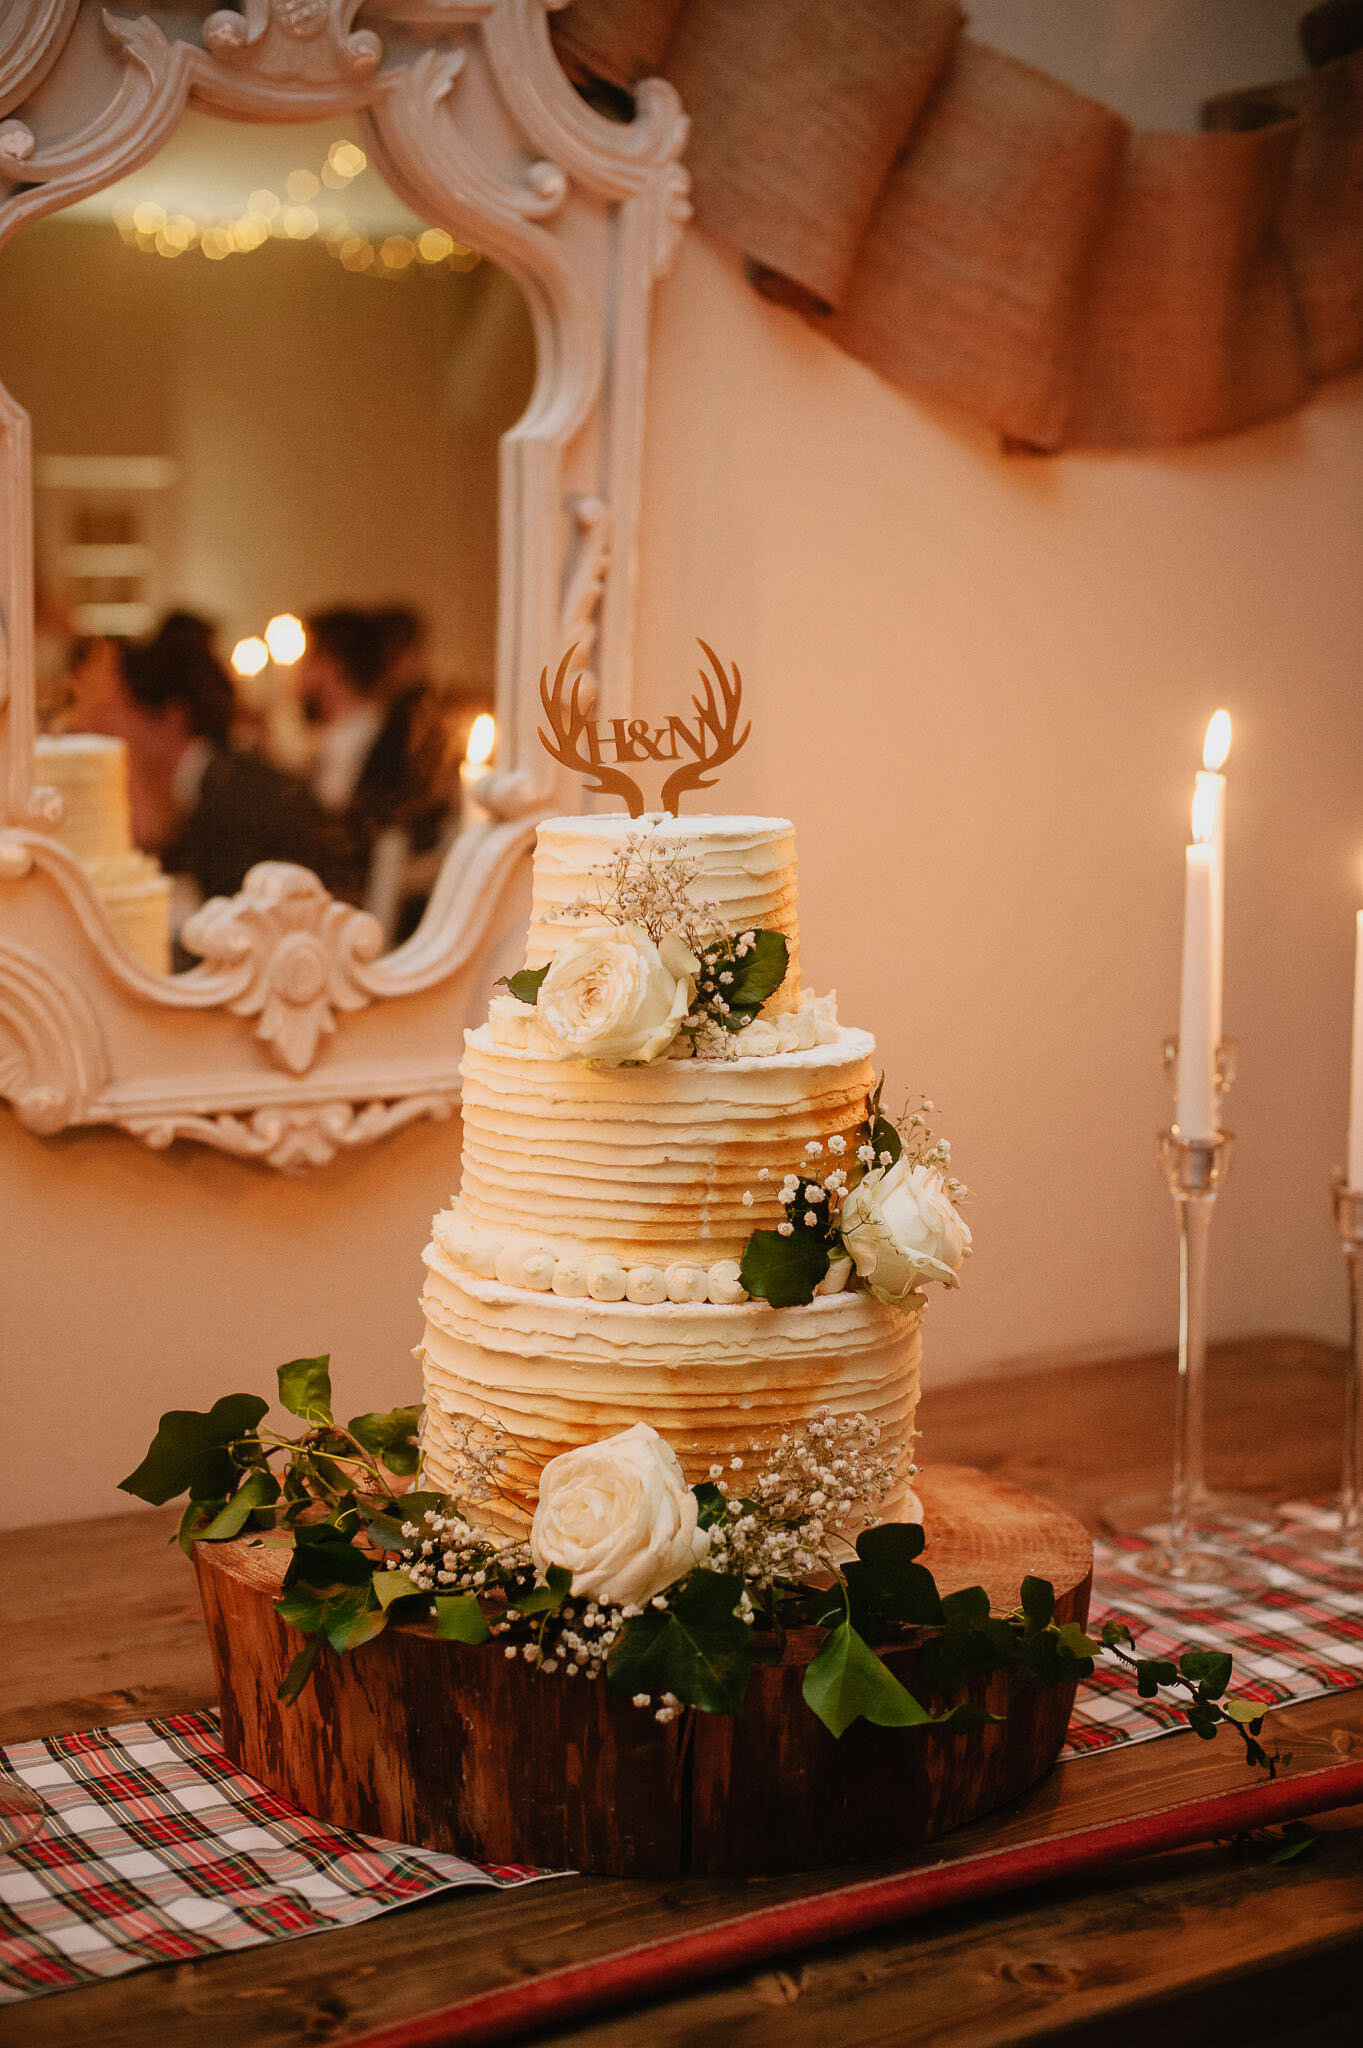 wedding cake with flowers from best Irish wedding vendors.